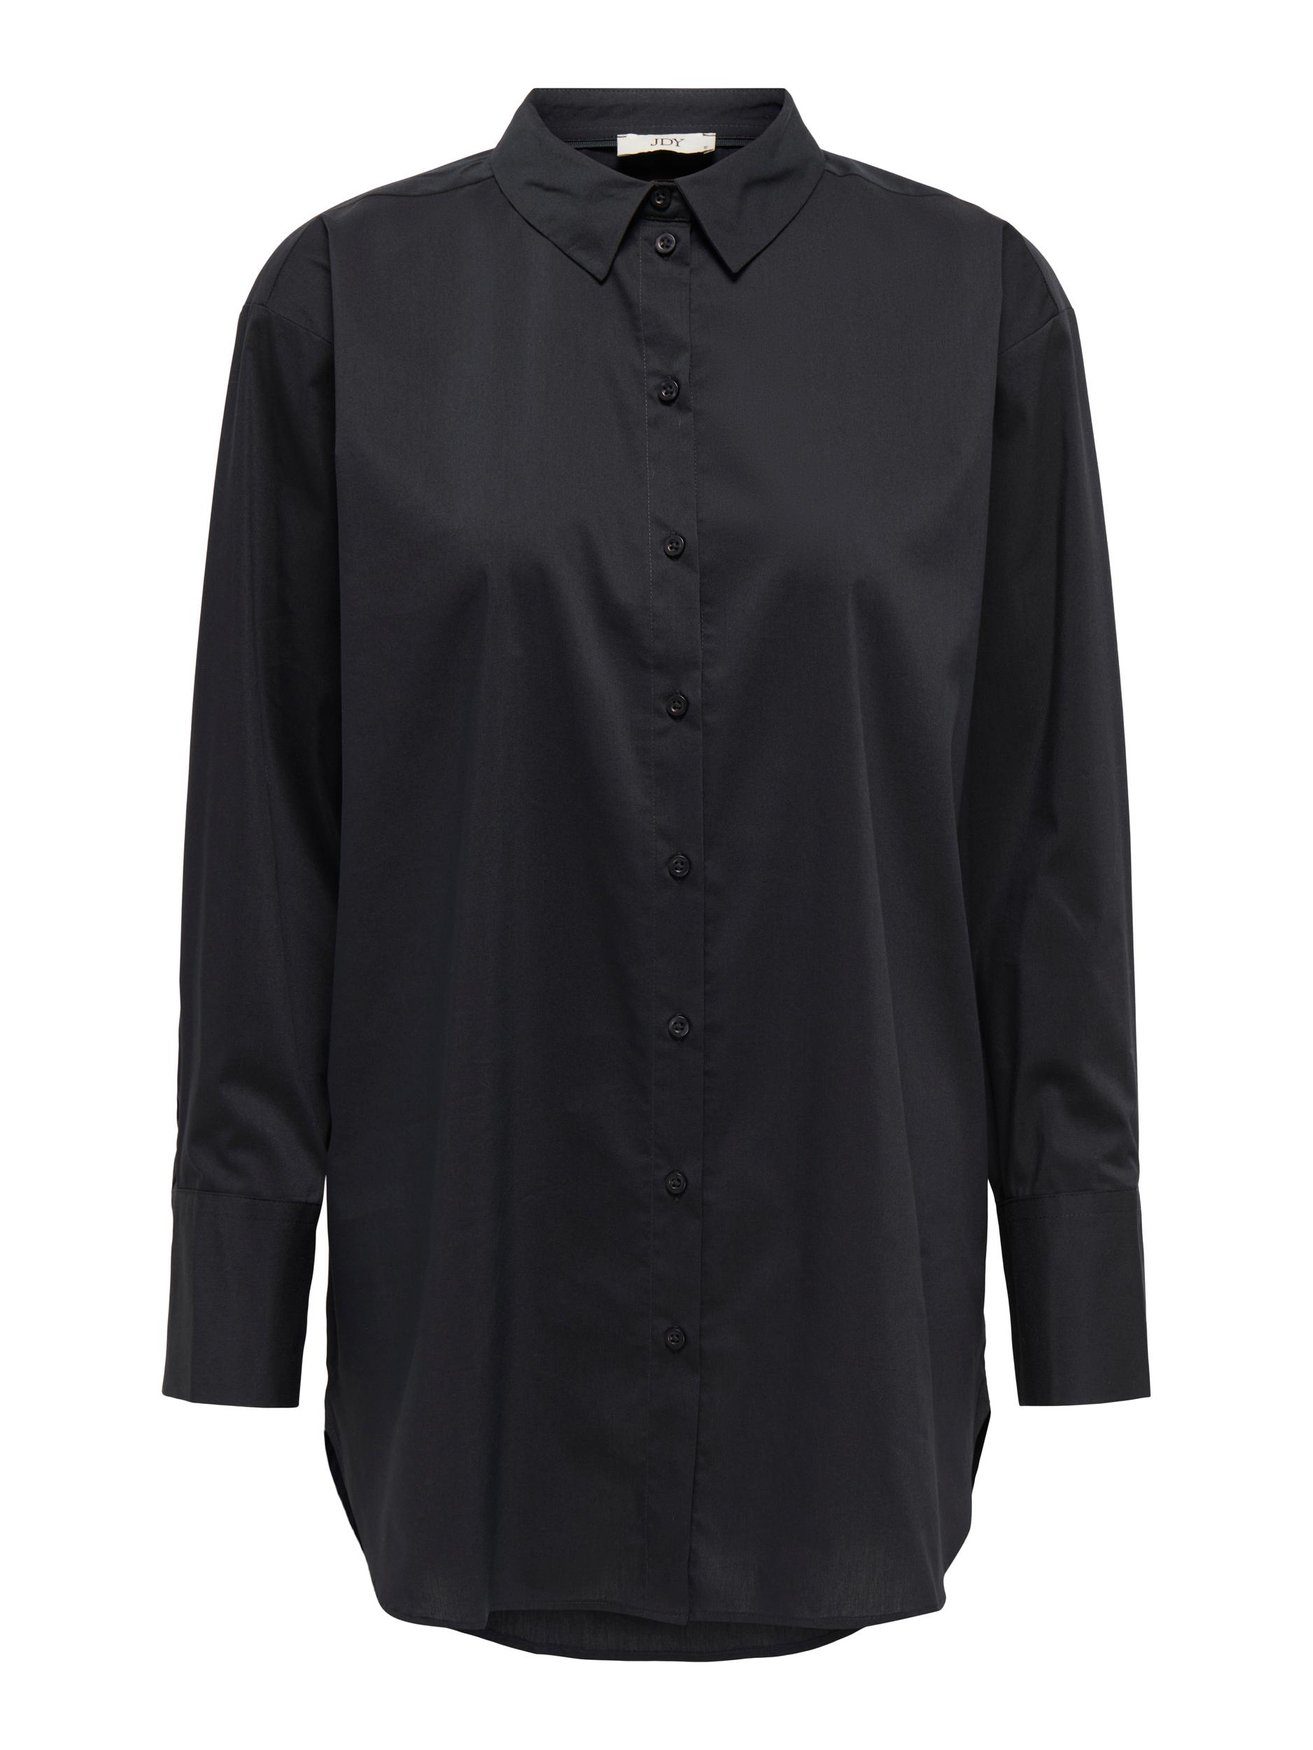 Freizeit (1-tlg) JACQUELINE Navy Bluse Hemd 3699 de Blusenshirt Design Shirt in YONG